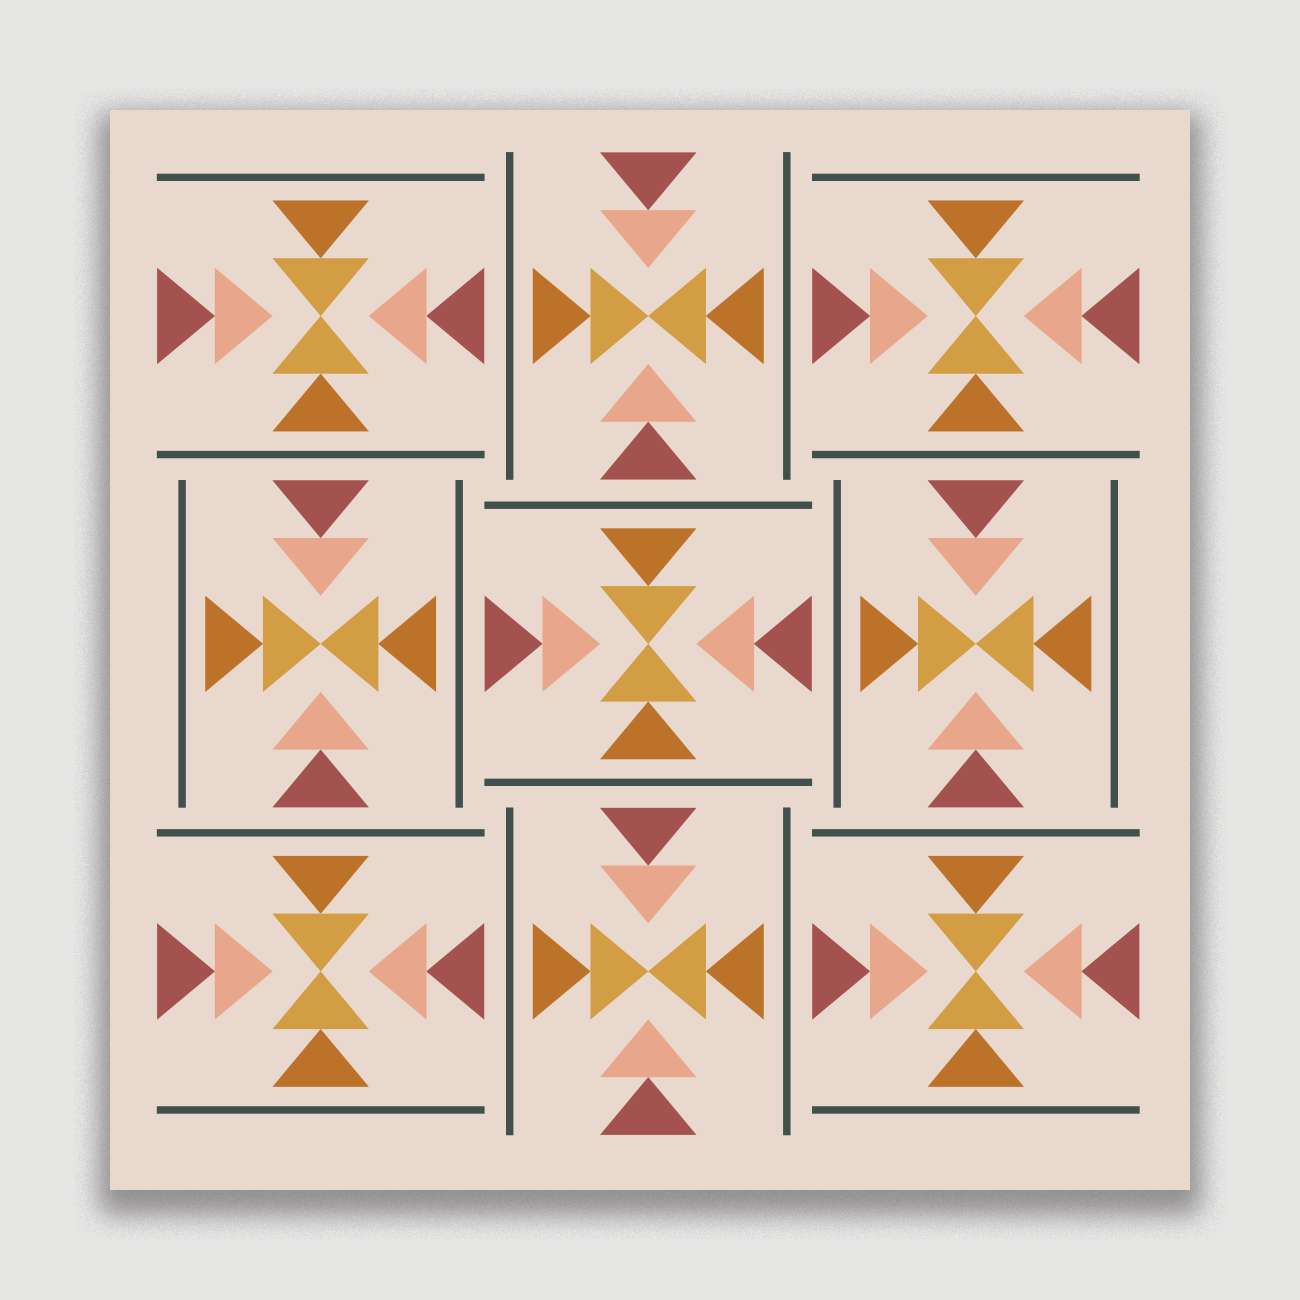 Landmark Paper Pattern